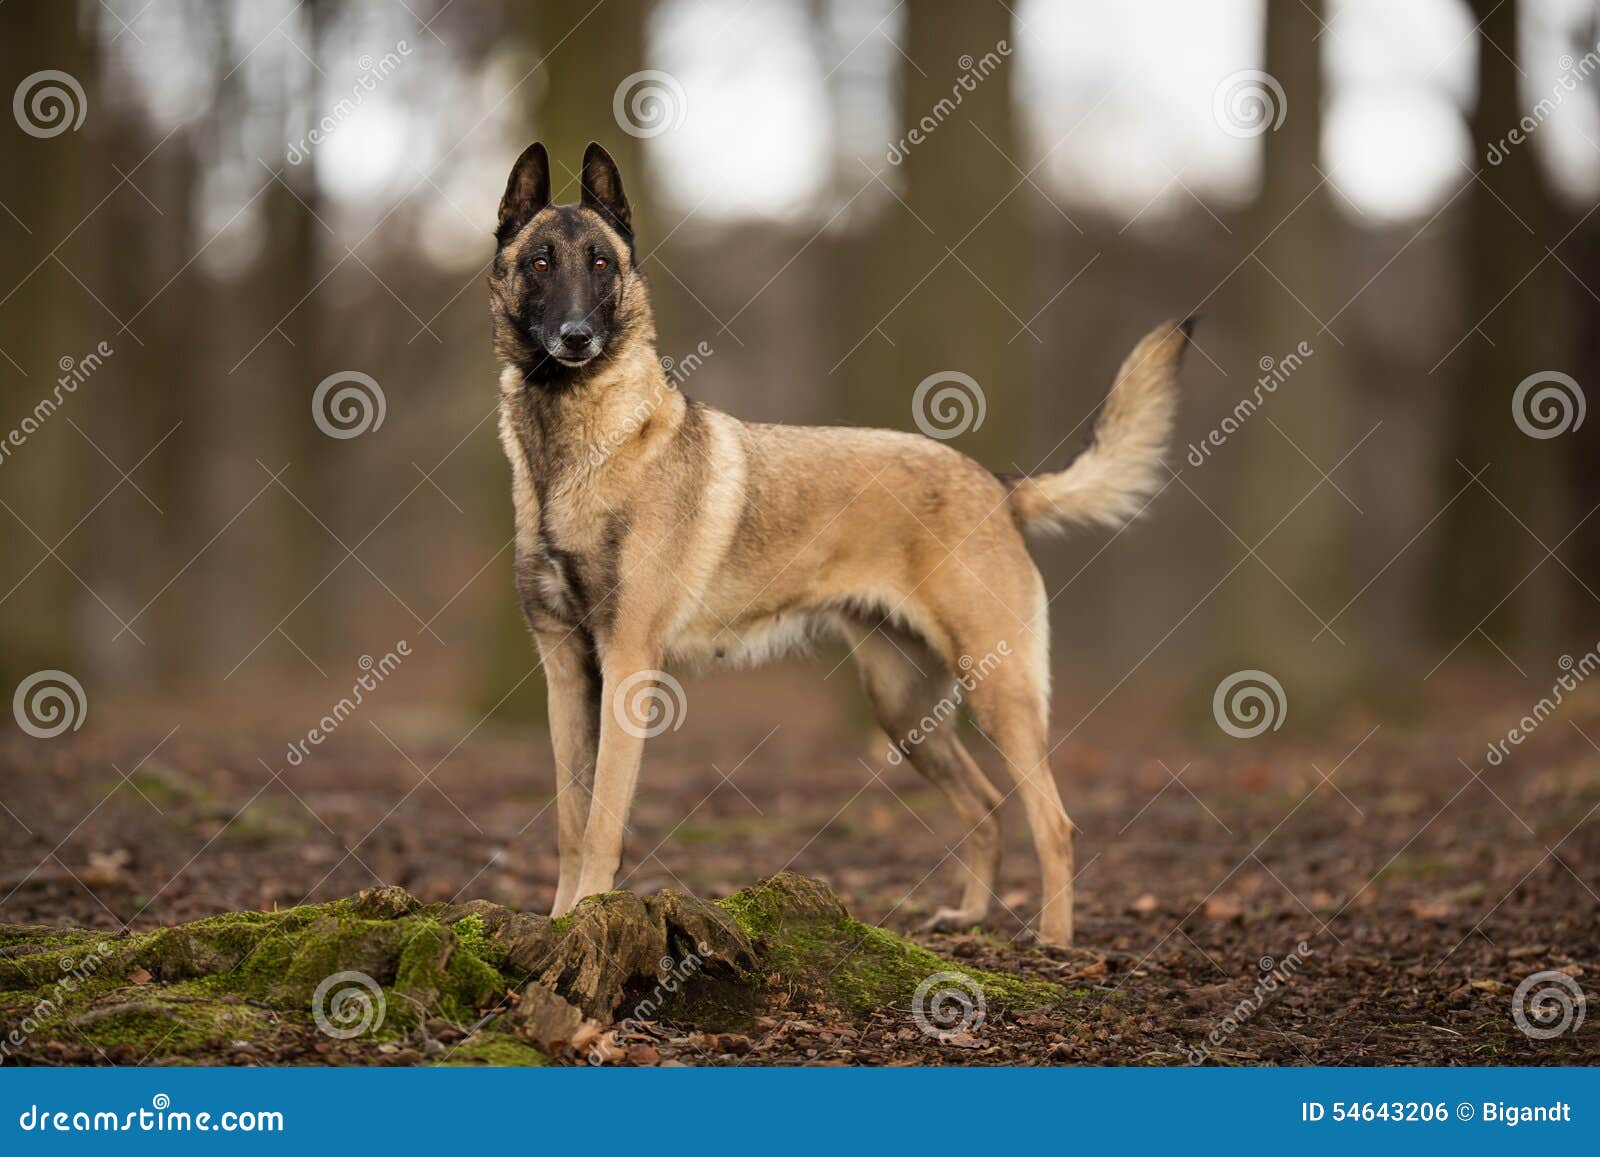 purebred belgian malinois dog